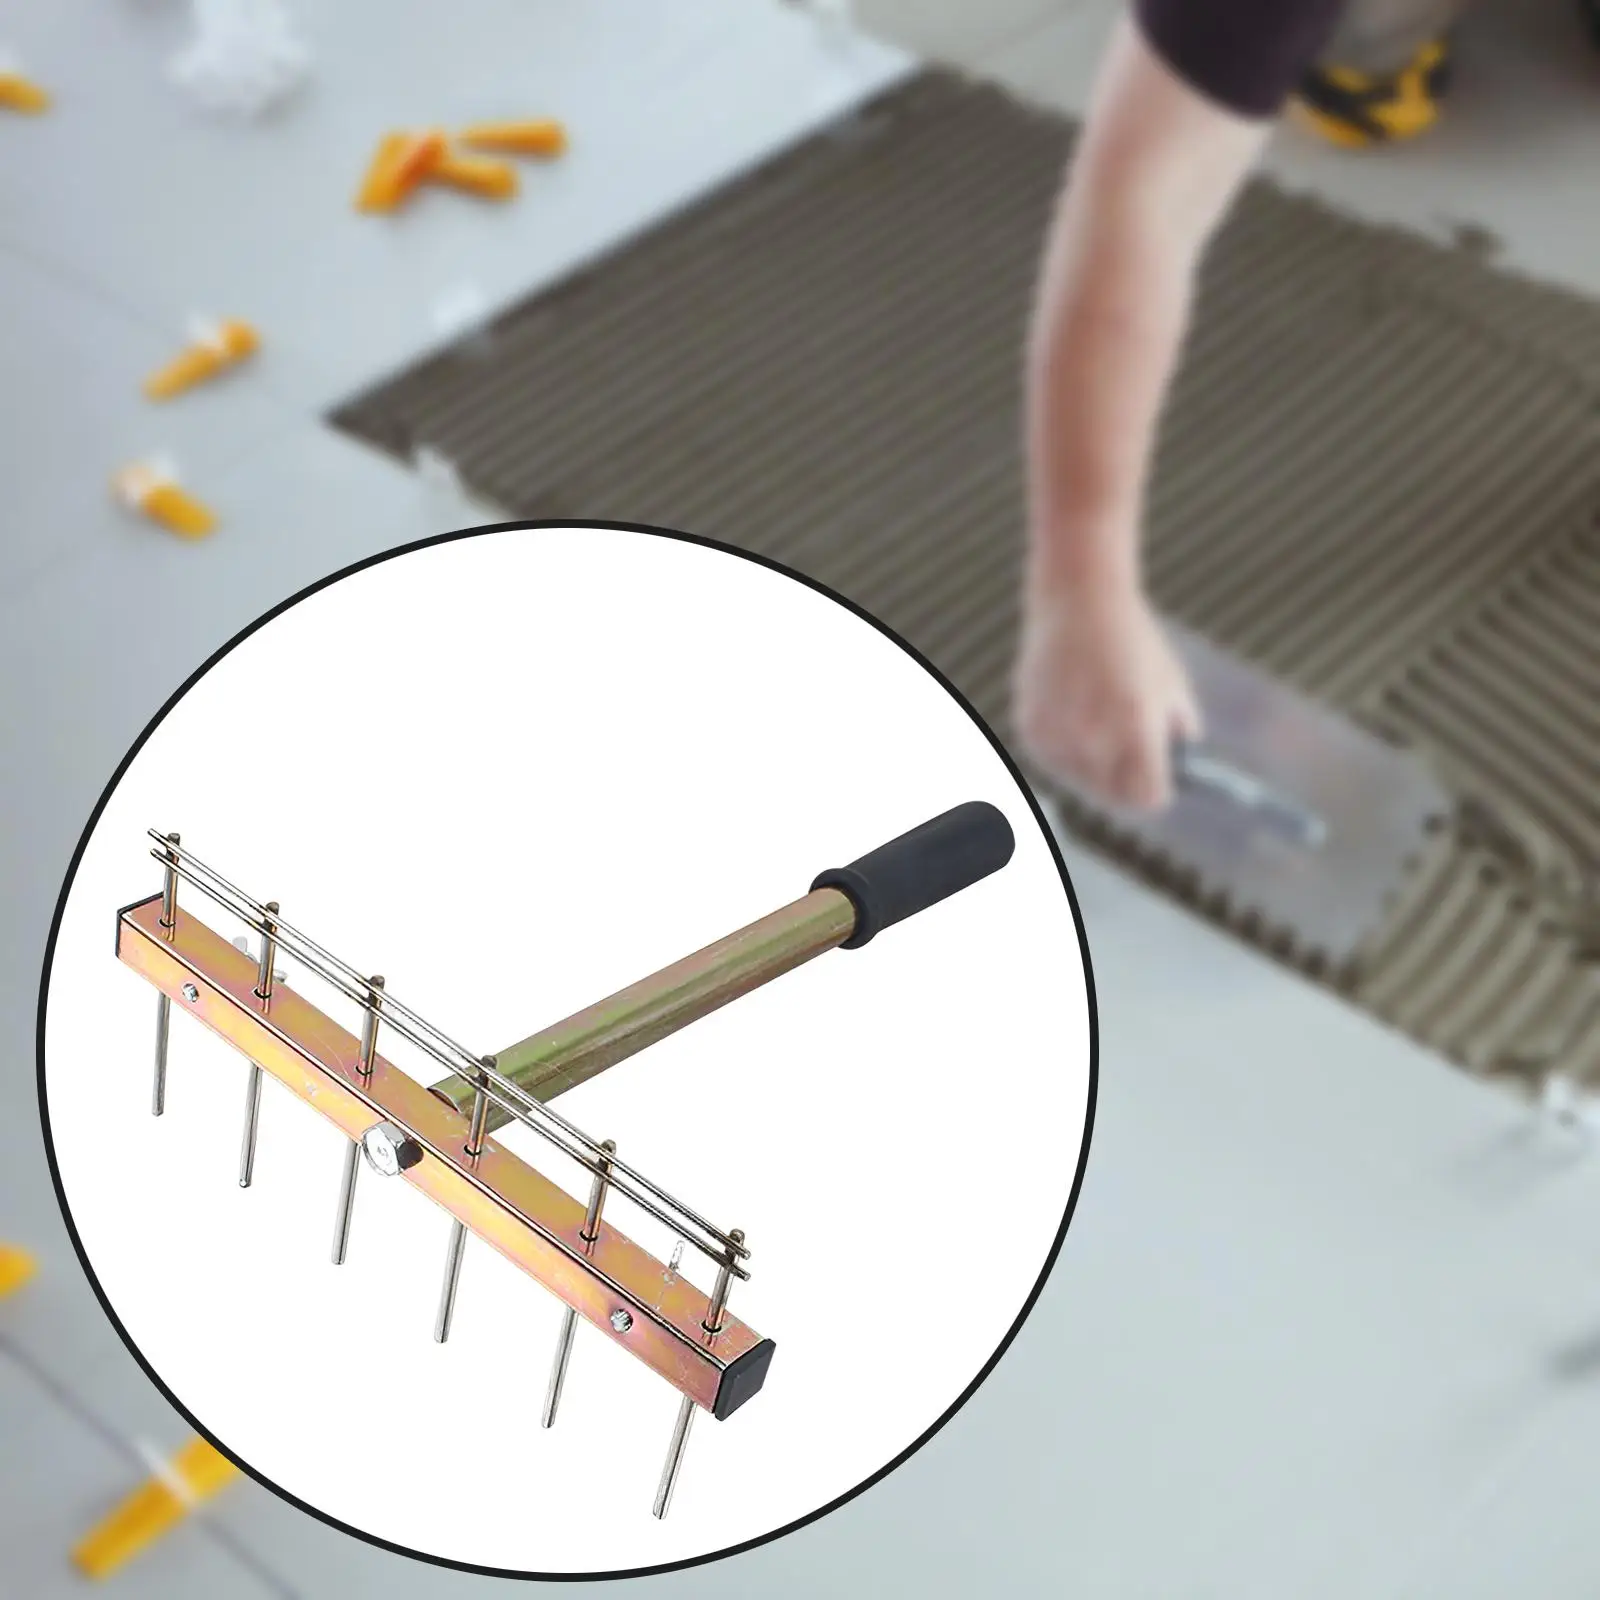 Floor Paving Tile Builder Tool Loosening Mortar Tines Tiles Laying Leveling System Tiling Masonry Tool Floor Ceramic Trowel